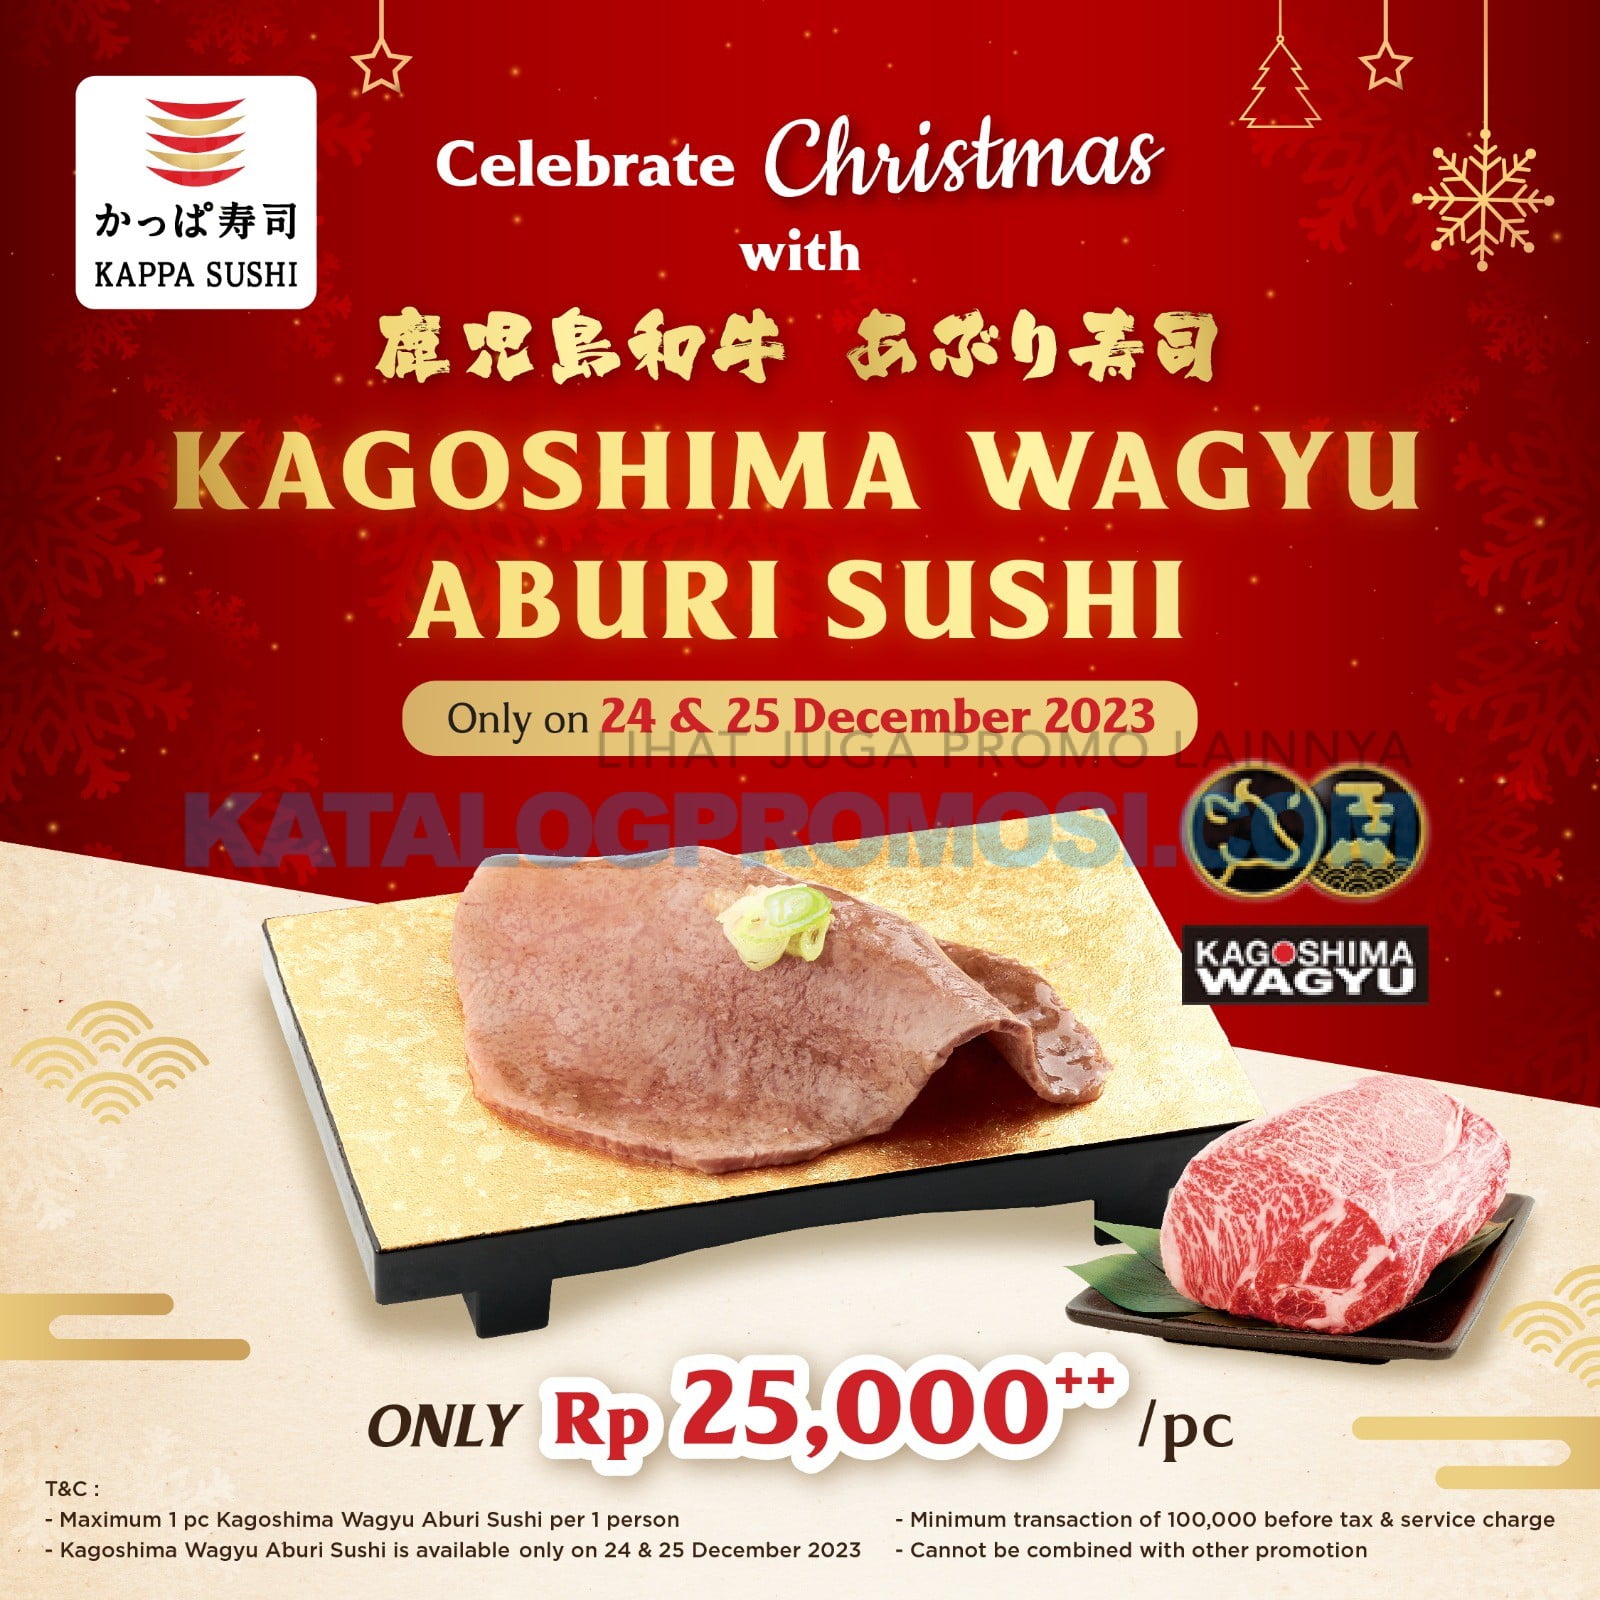 Promo KAPPA SUSHI CELEBRATE CHRISTMAS - KAGOSHIMA WAGYU ABURI SUSHI cuma 25,000 tersedia hanya di tanggal 24-25 Desember 2023